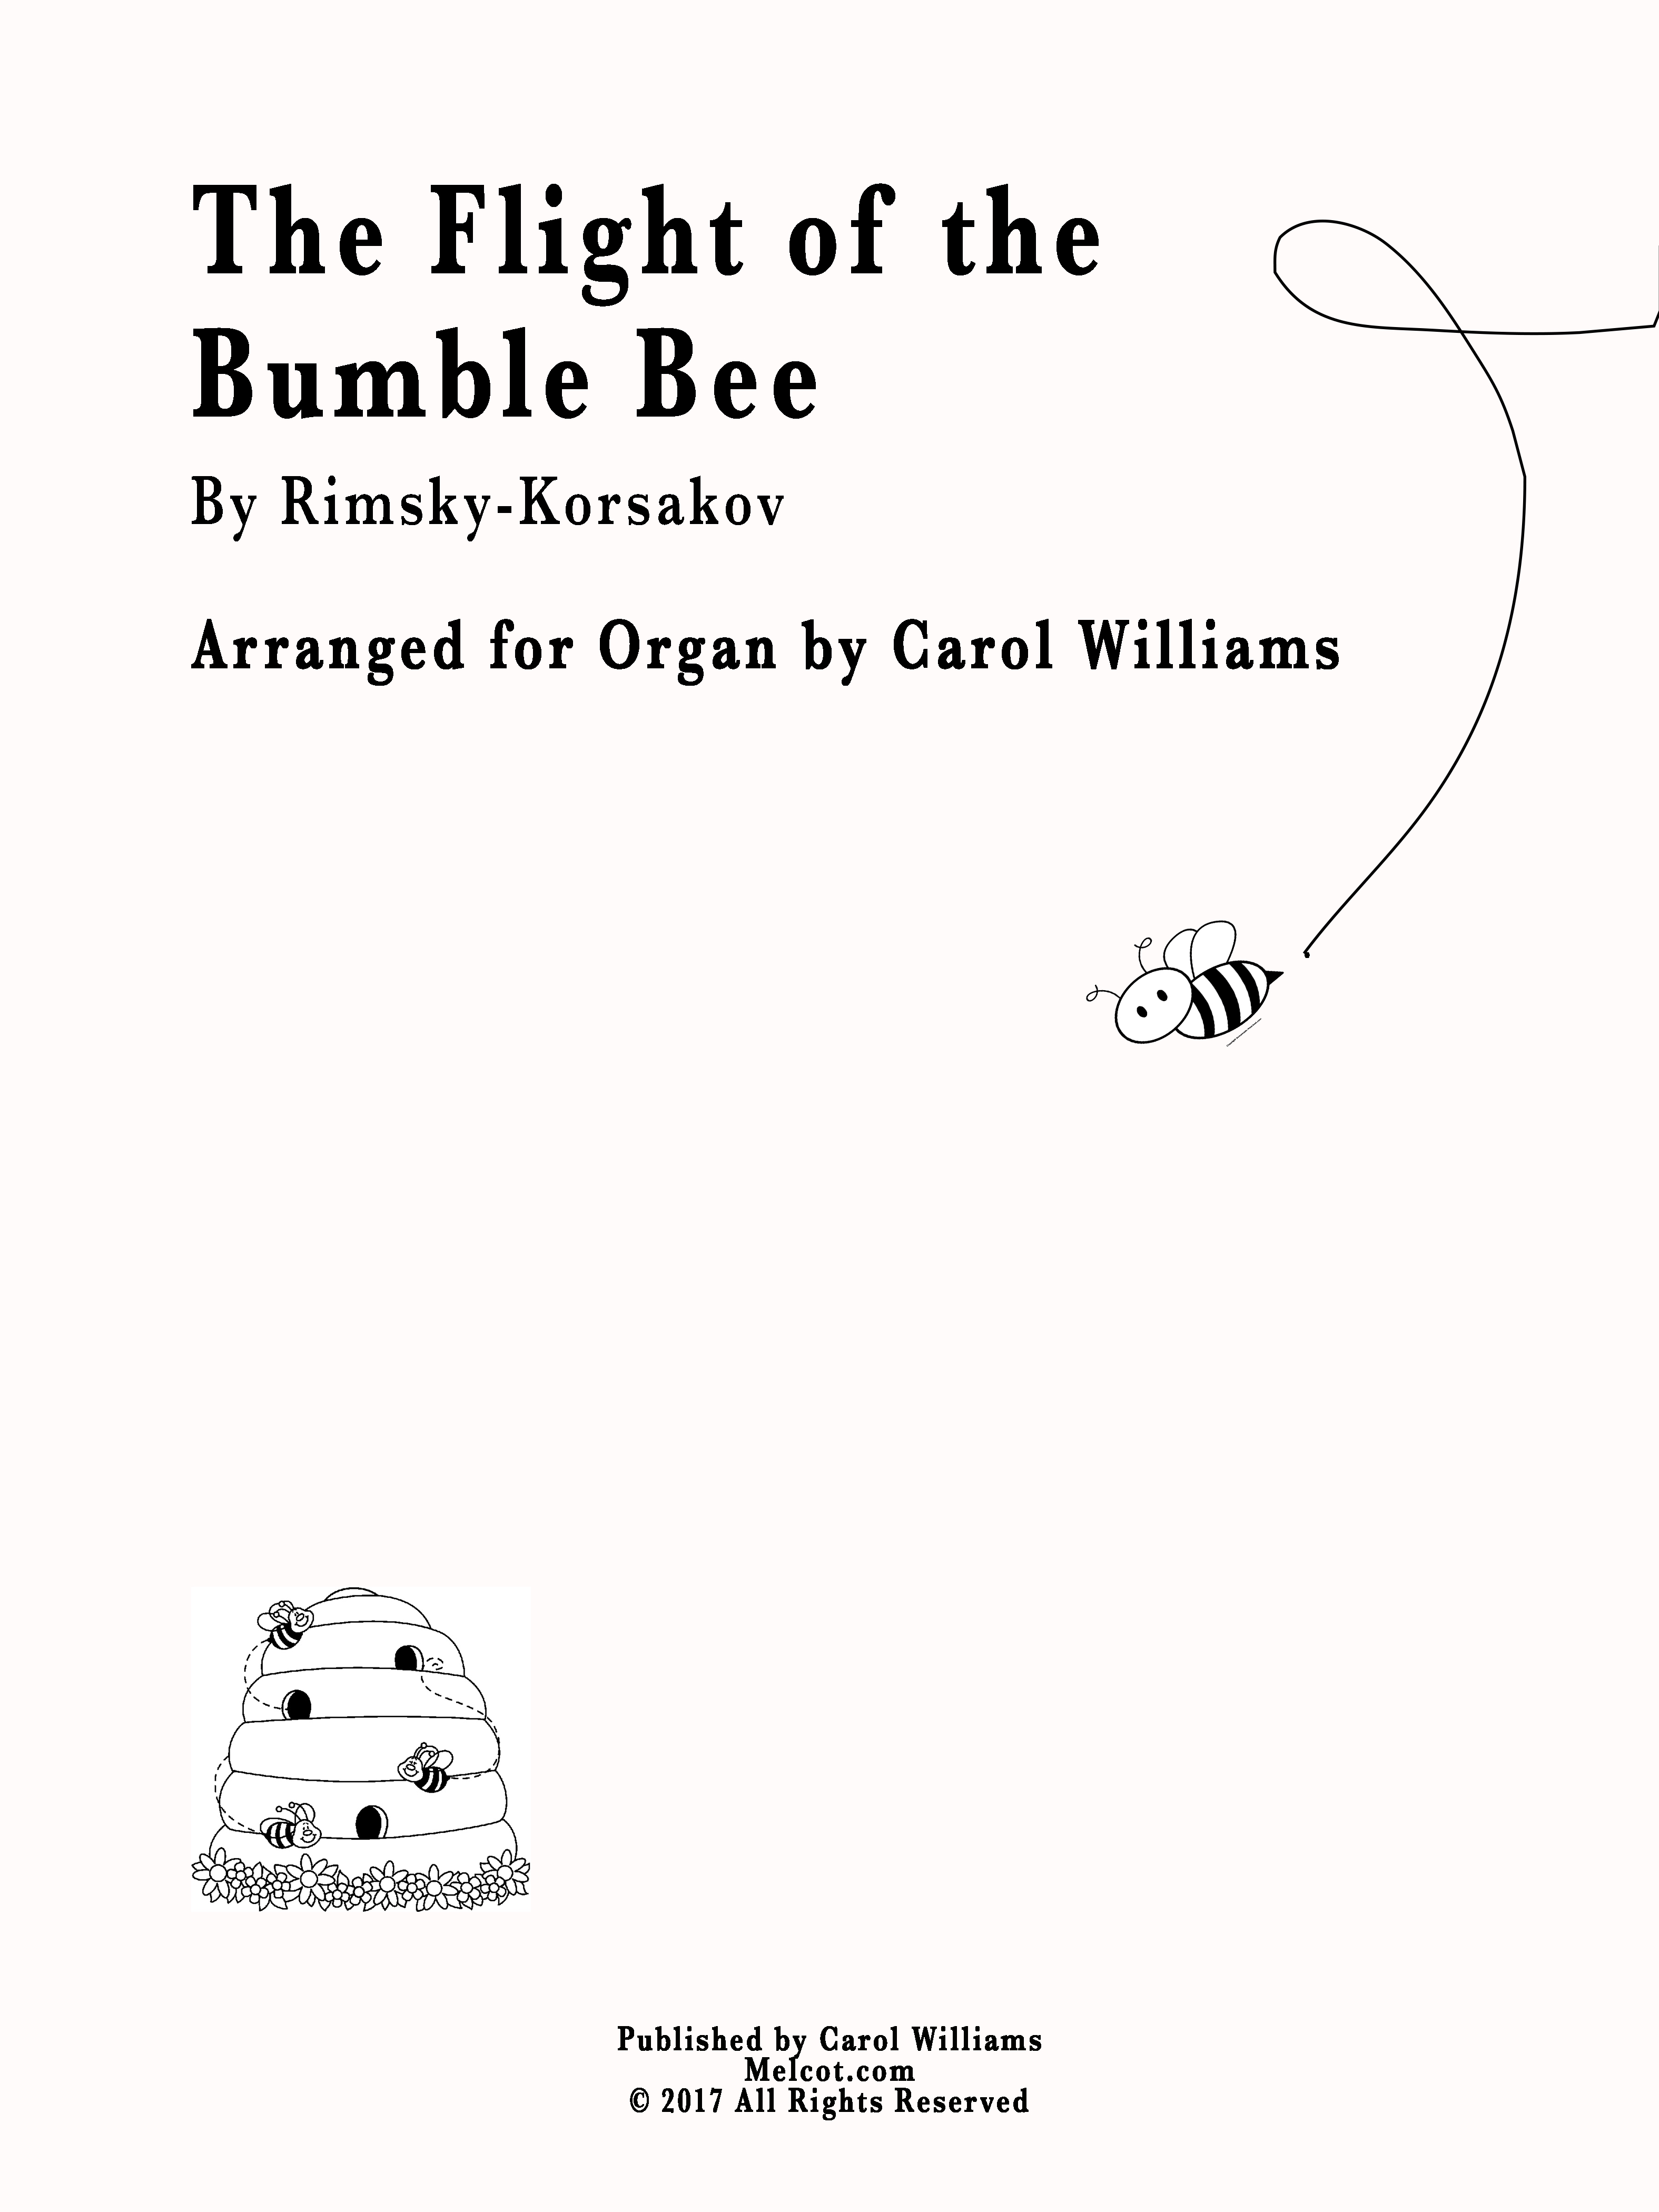 Bumble Bee flight
                            score